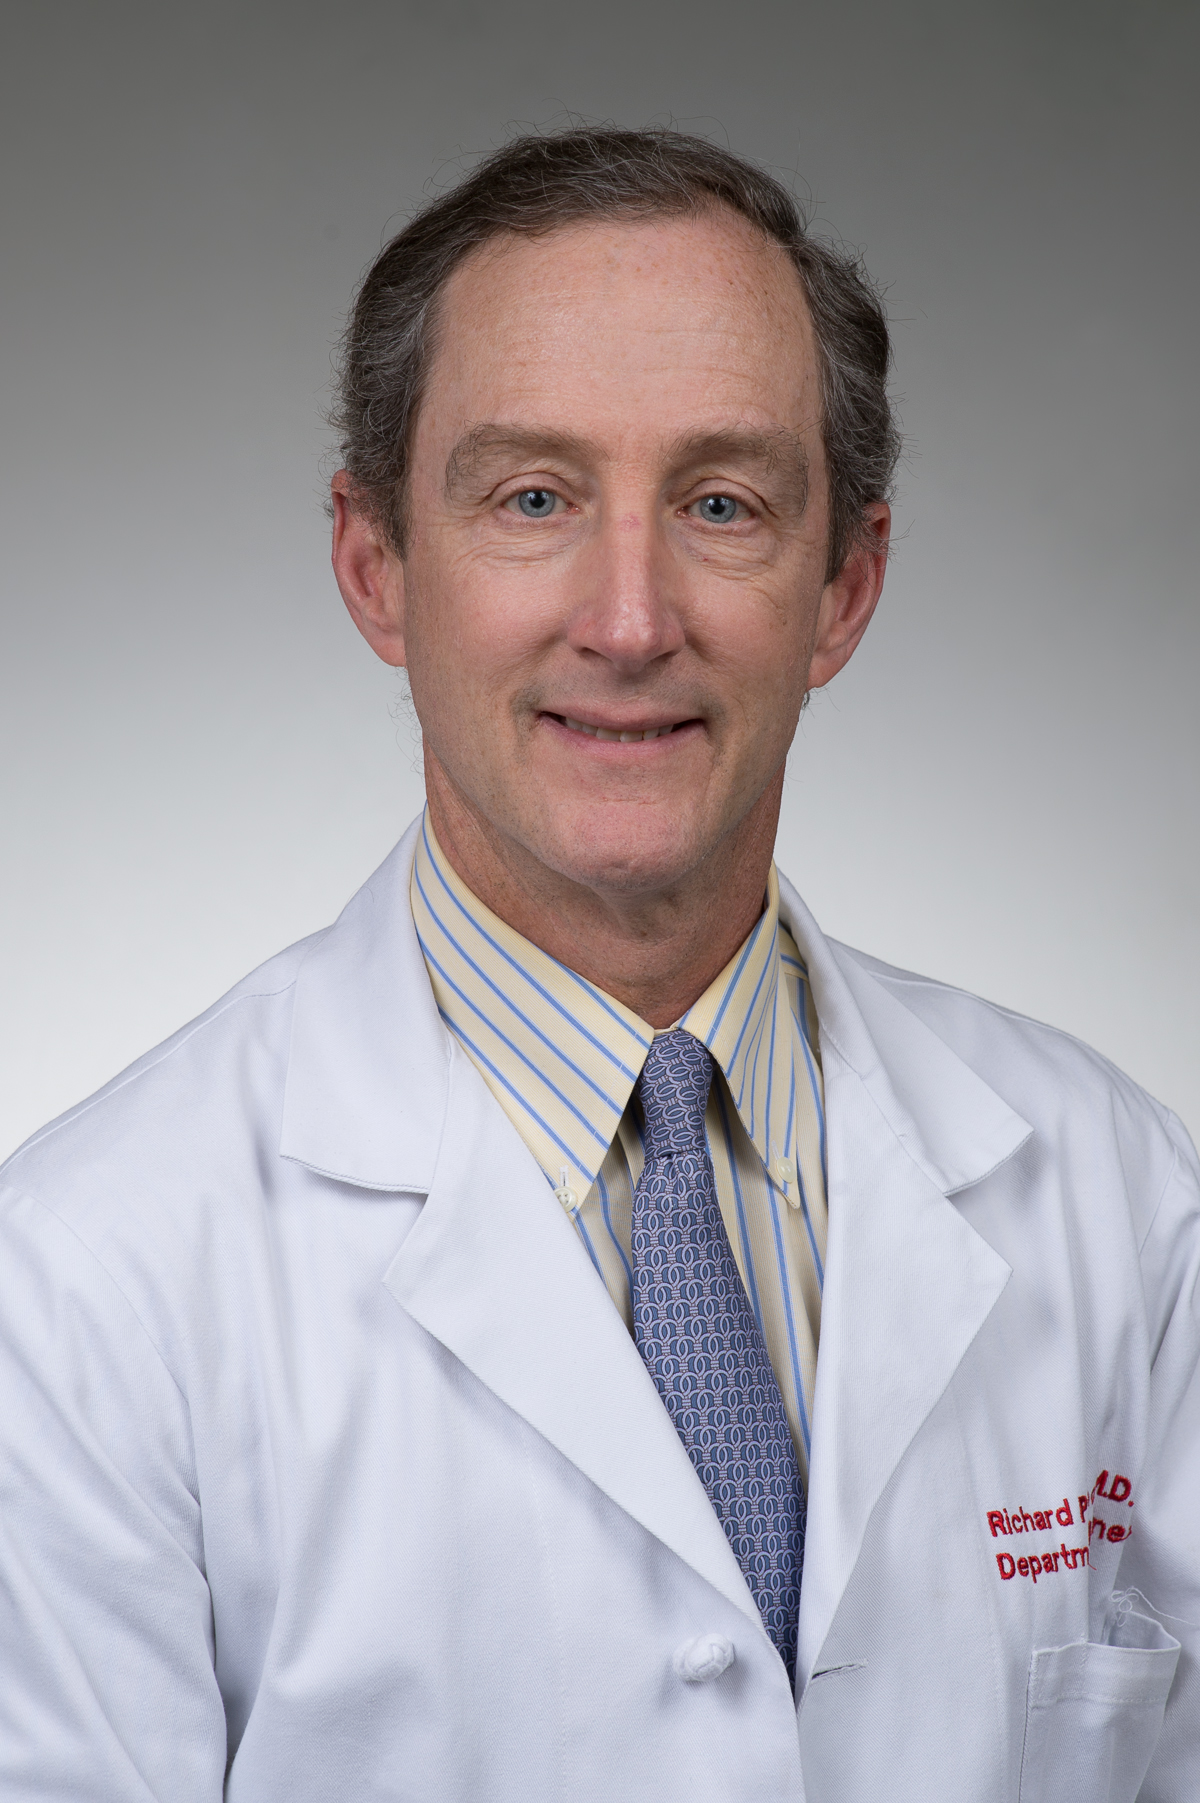 Dr. Richard Patrick headshot